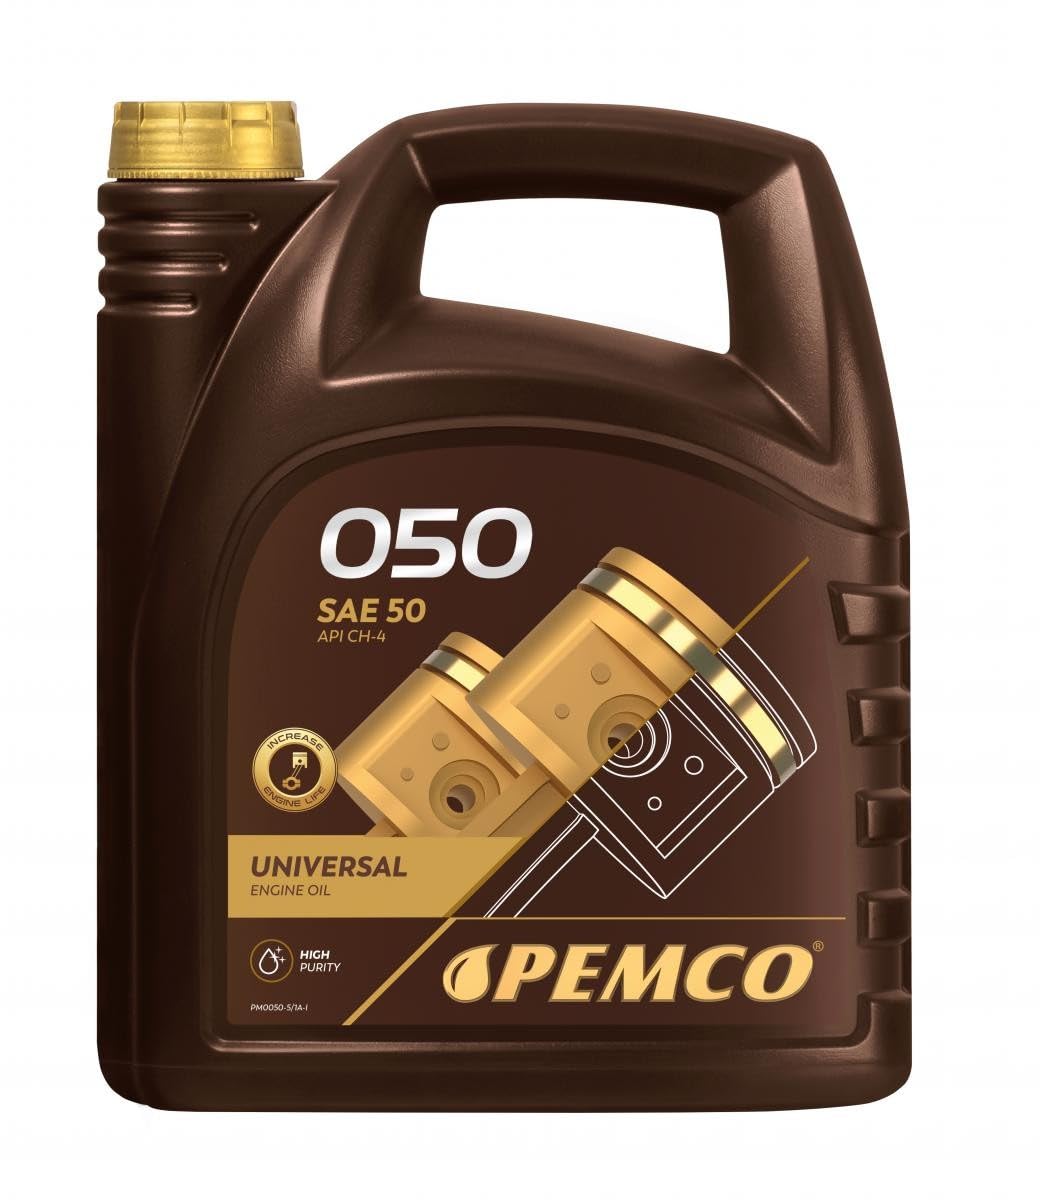 Pemco Motoröl SAE 50 Motorenöl Engine Oil Universal Pm0050-5 5L von Pemco